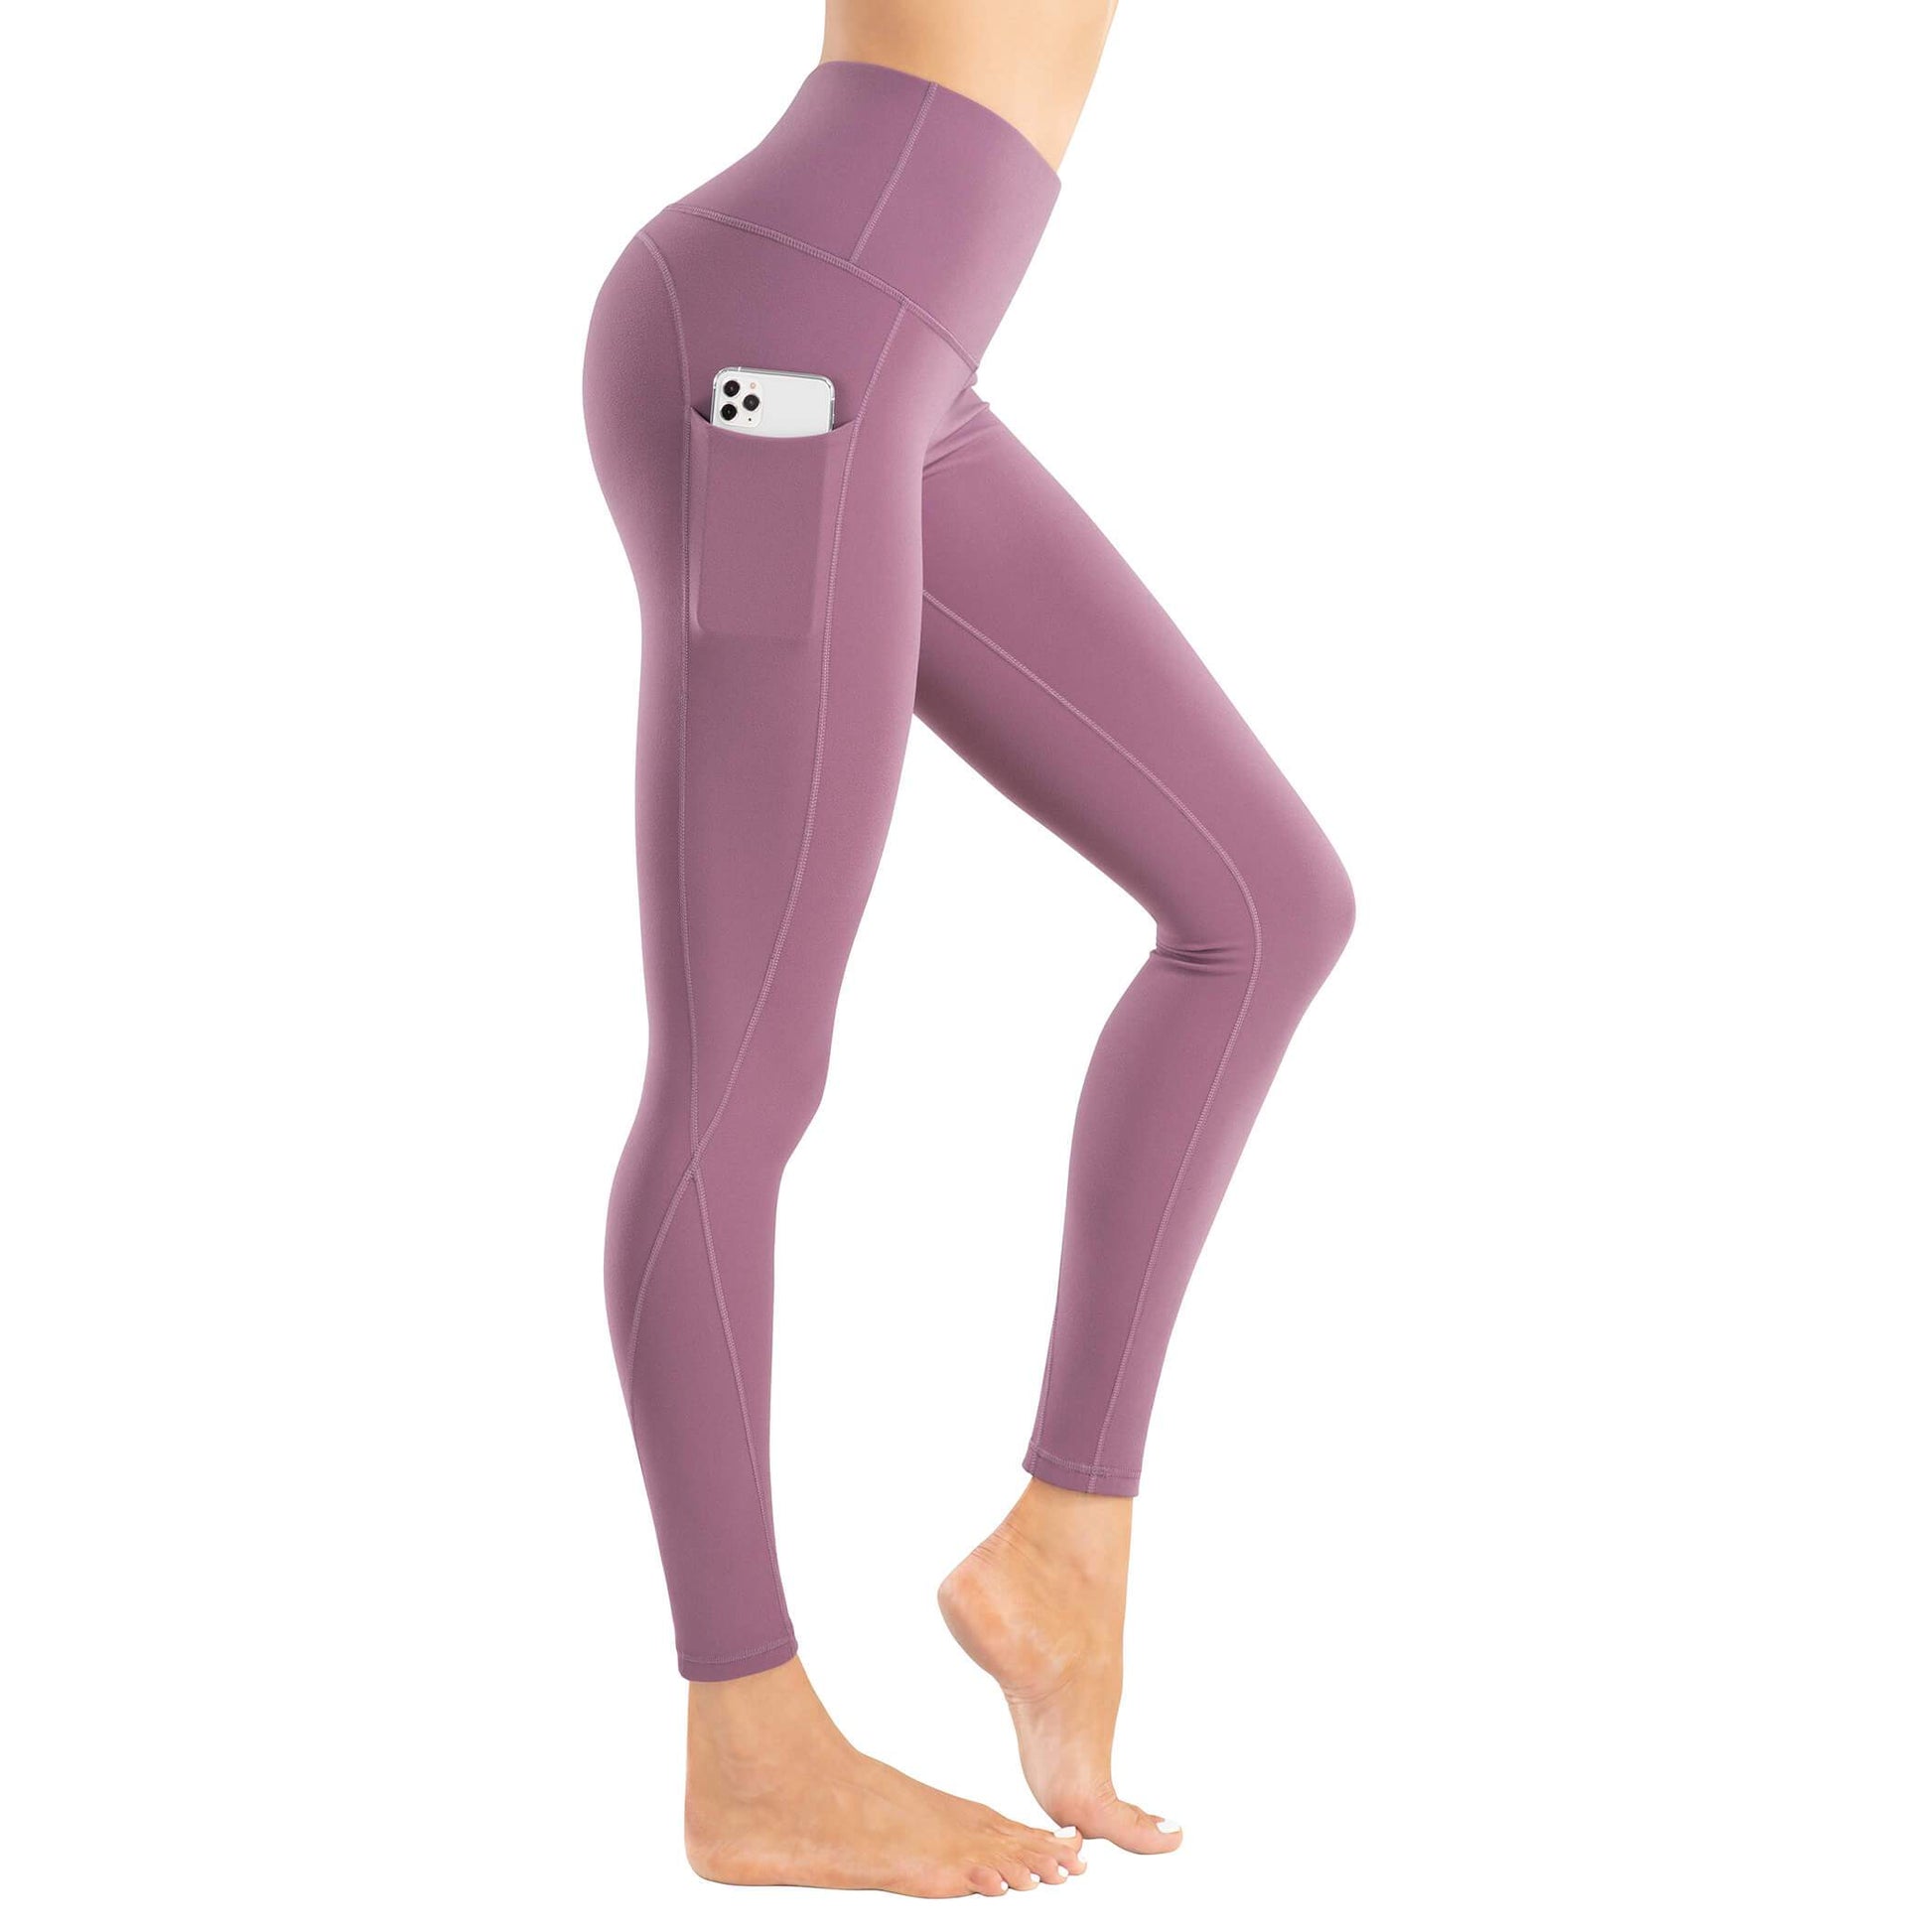 Penkiiy Yoga Pants 3PC Women's Knee Length Leggings High Waisted Yoga Workout  Exercise Capris For Casual Summer With Pockets Purple Yoga Leggings for  Women 